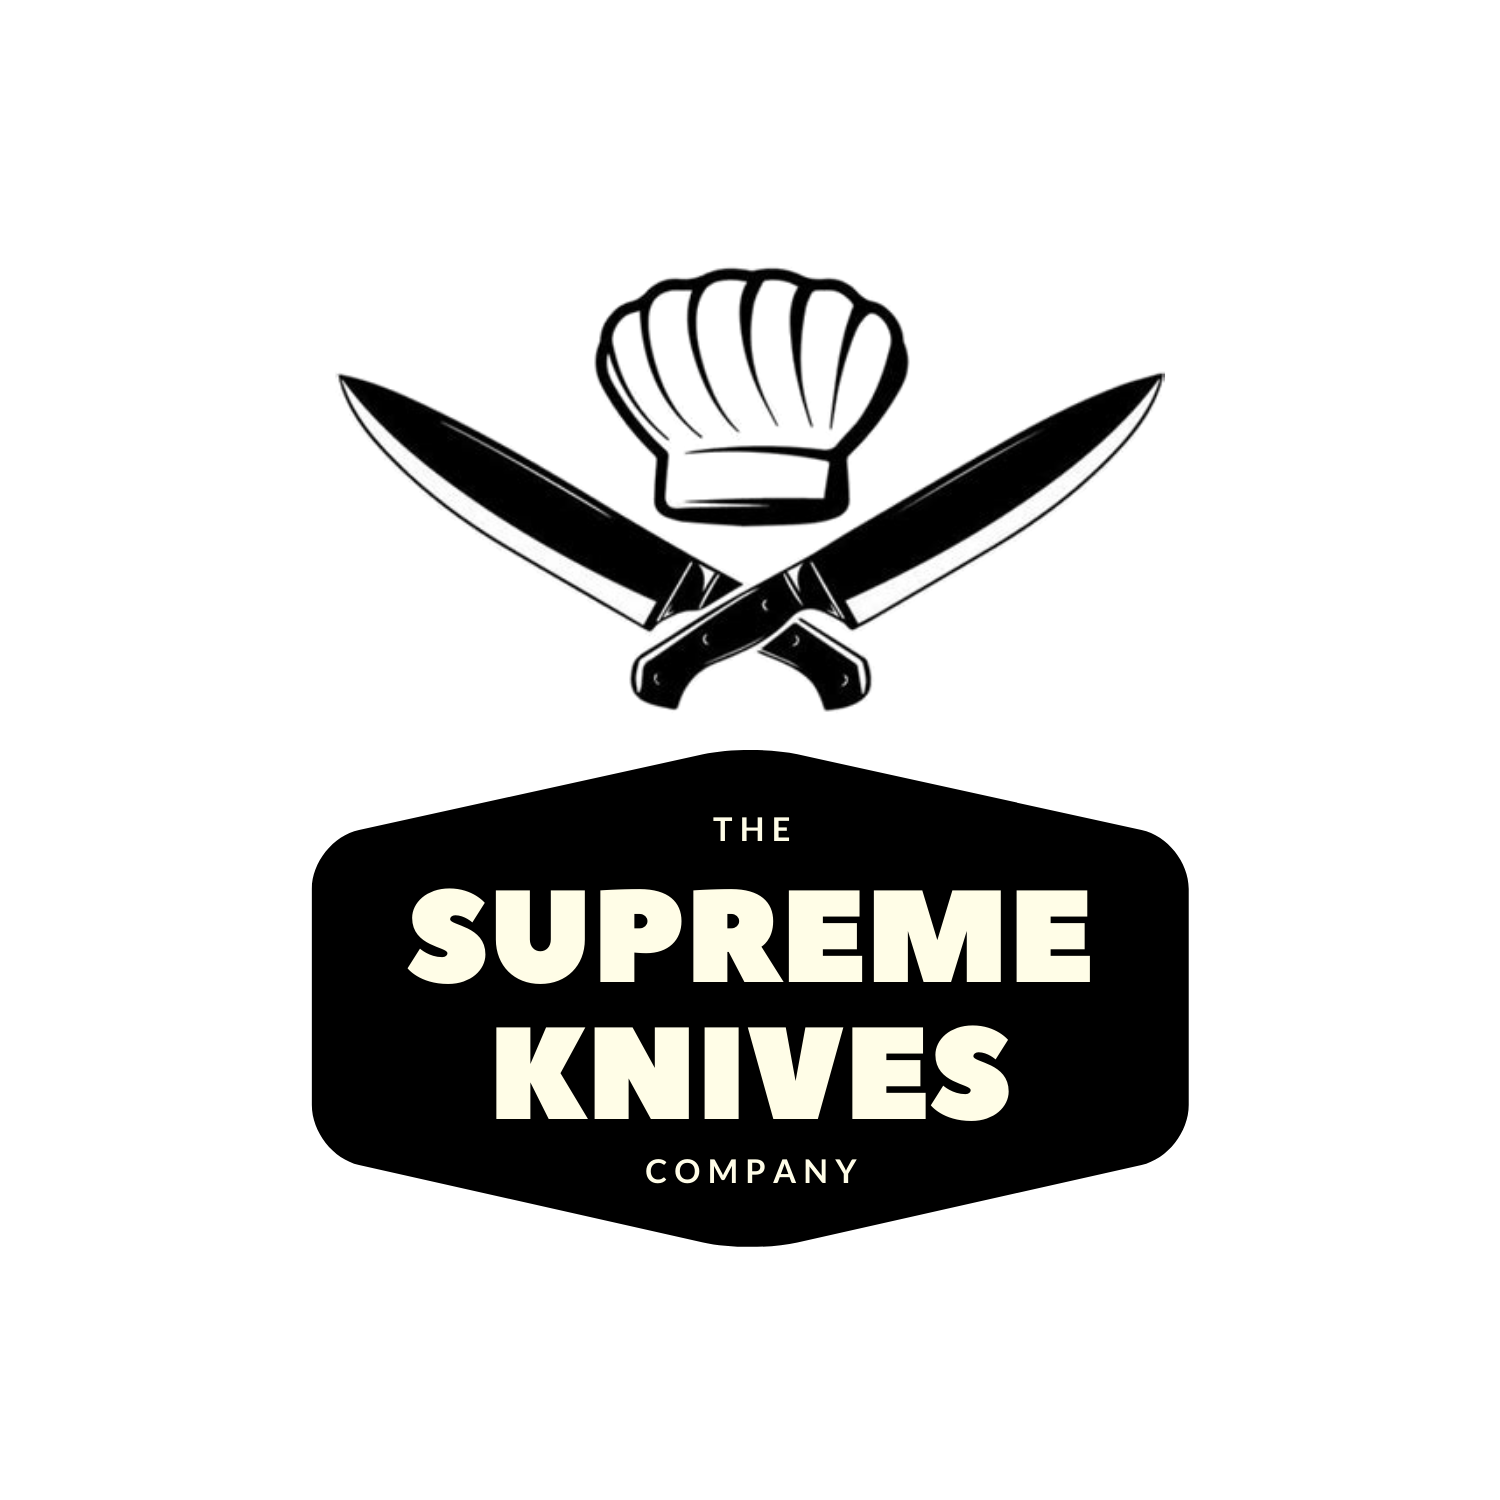 The Supreme Knives